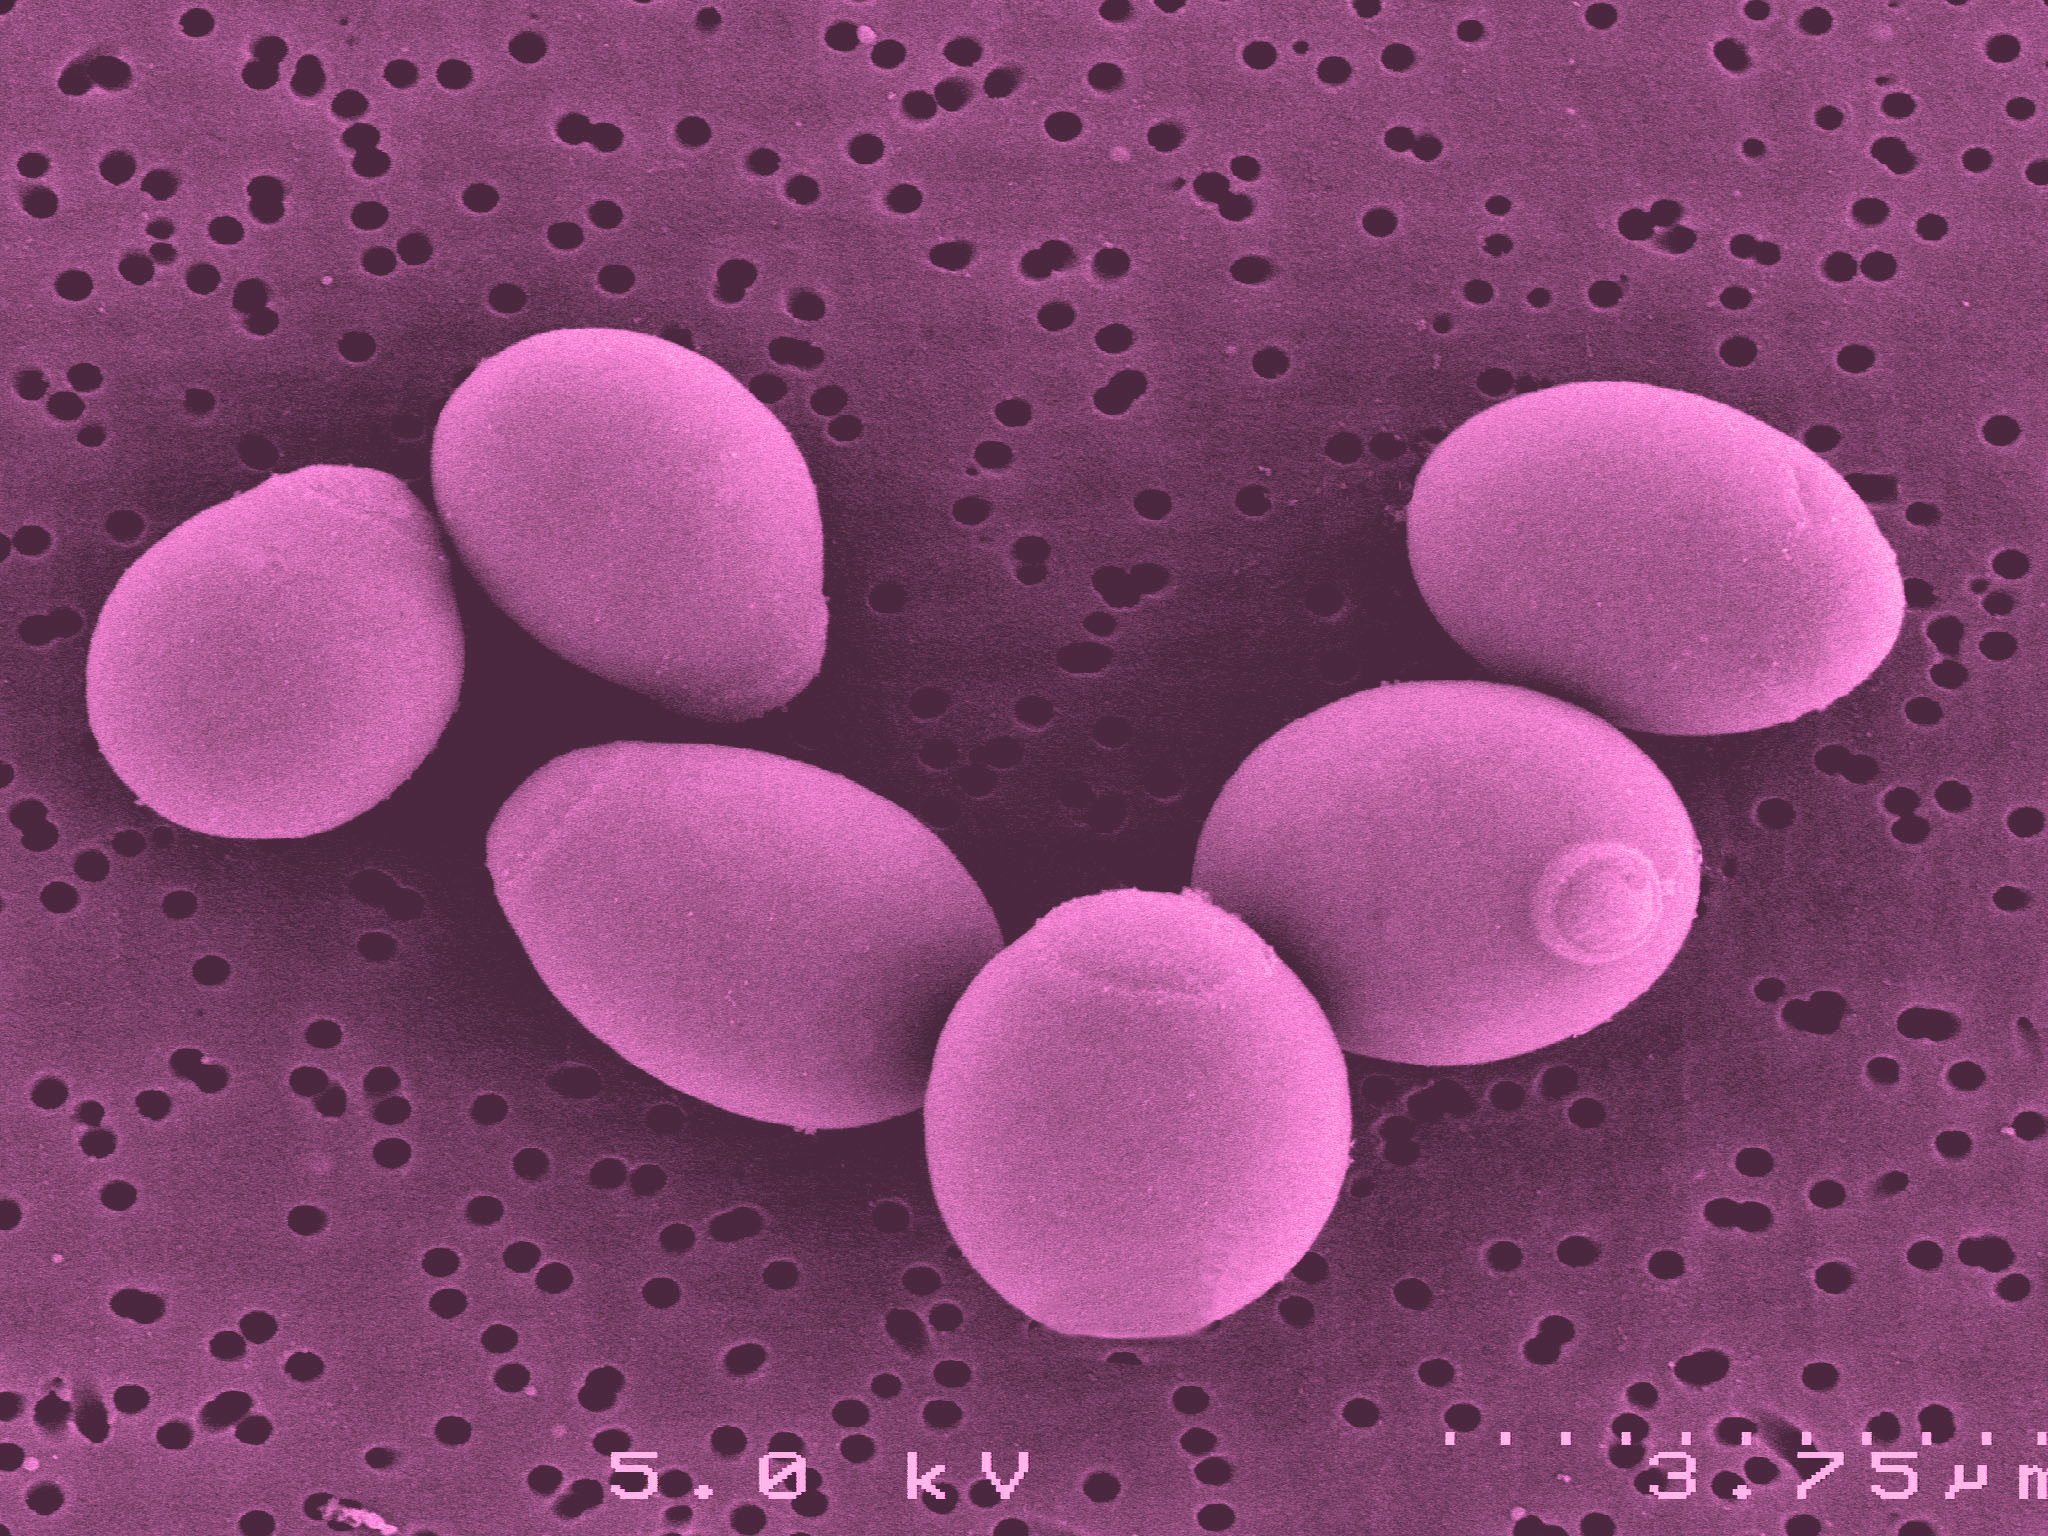 Saccharomyces boulardii - Wikipedia, la enciclopedia libre